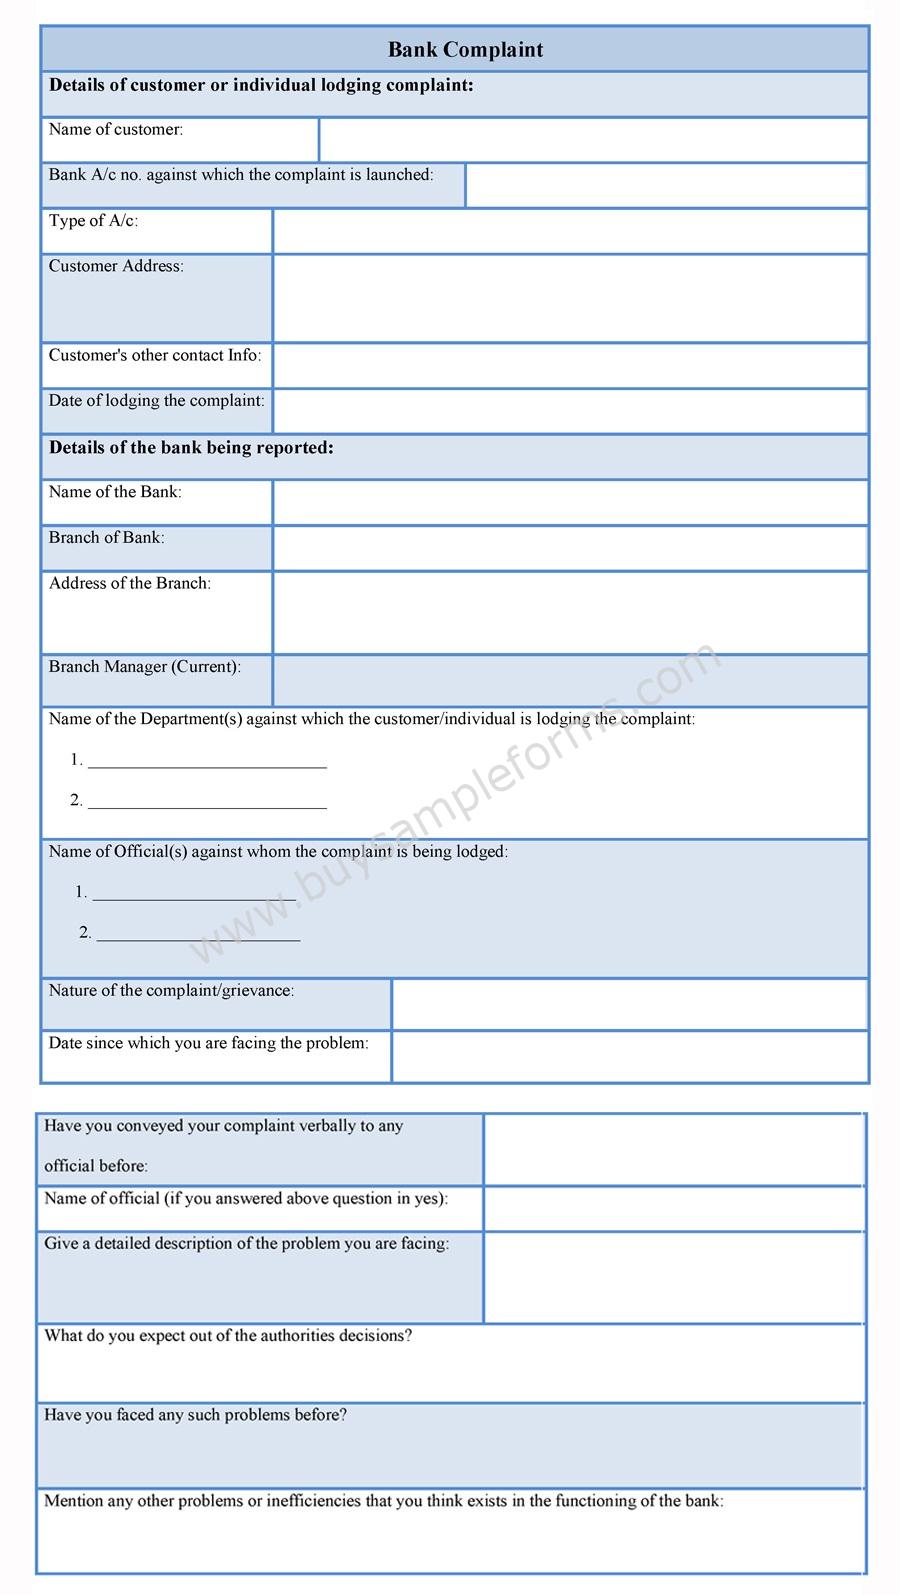 Bank Complaint Form sample